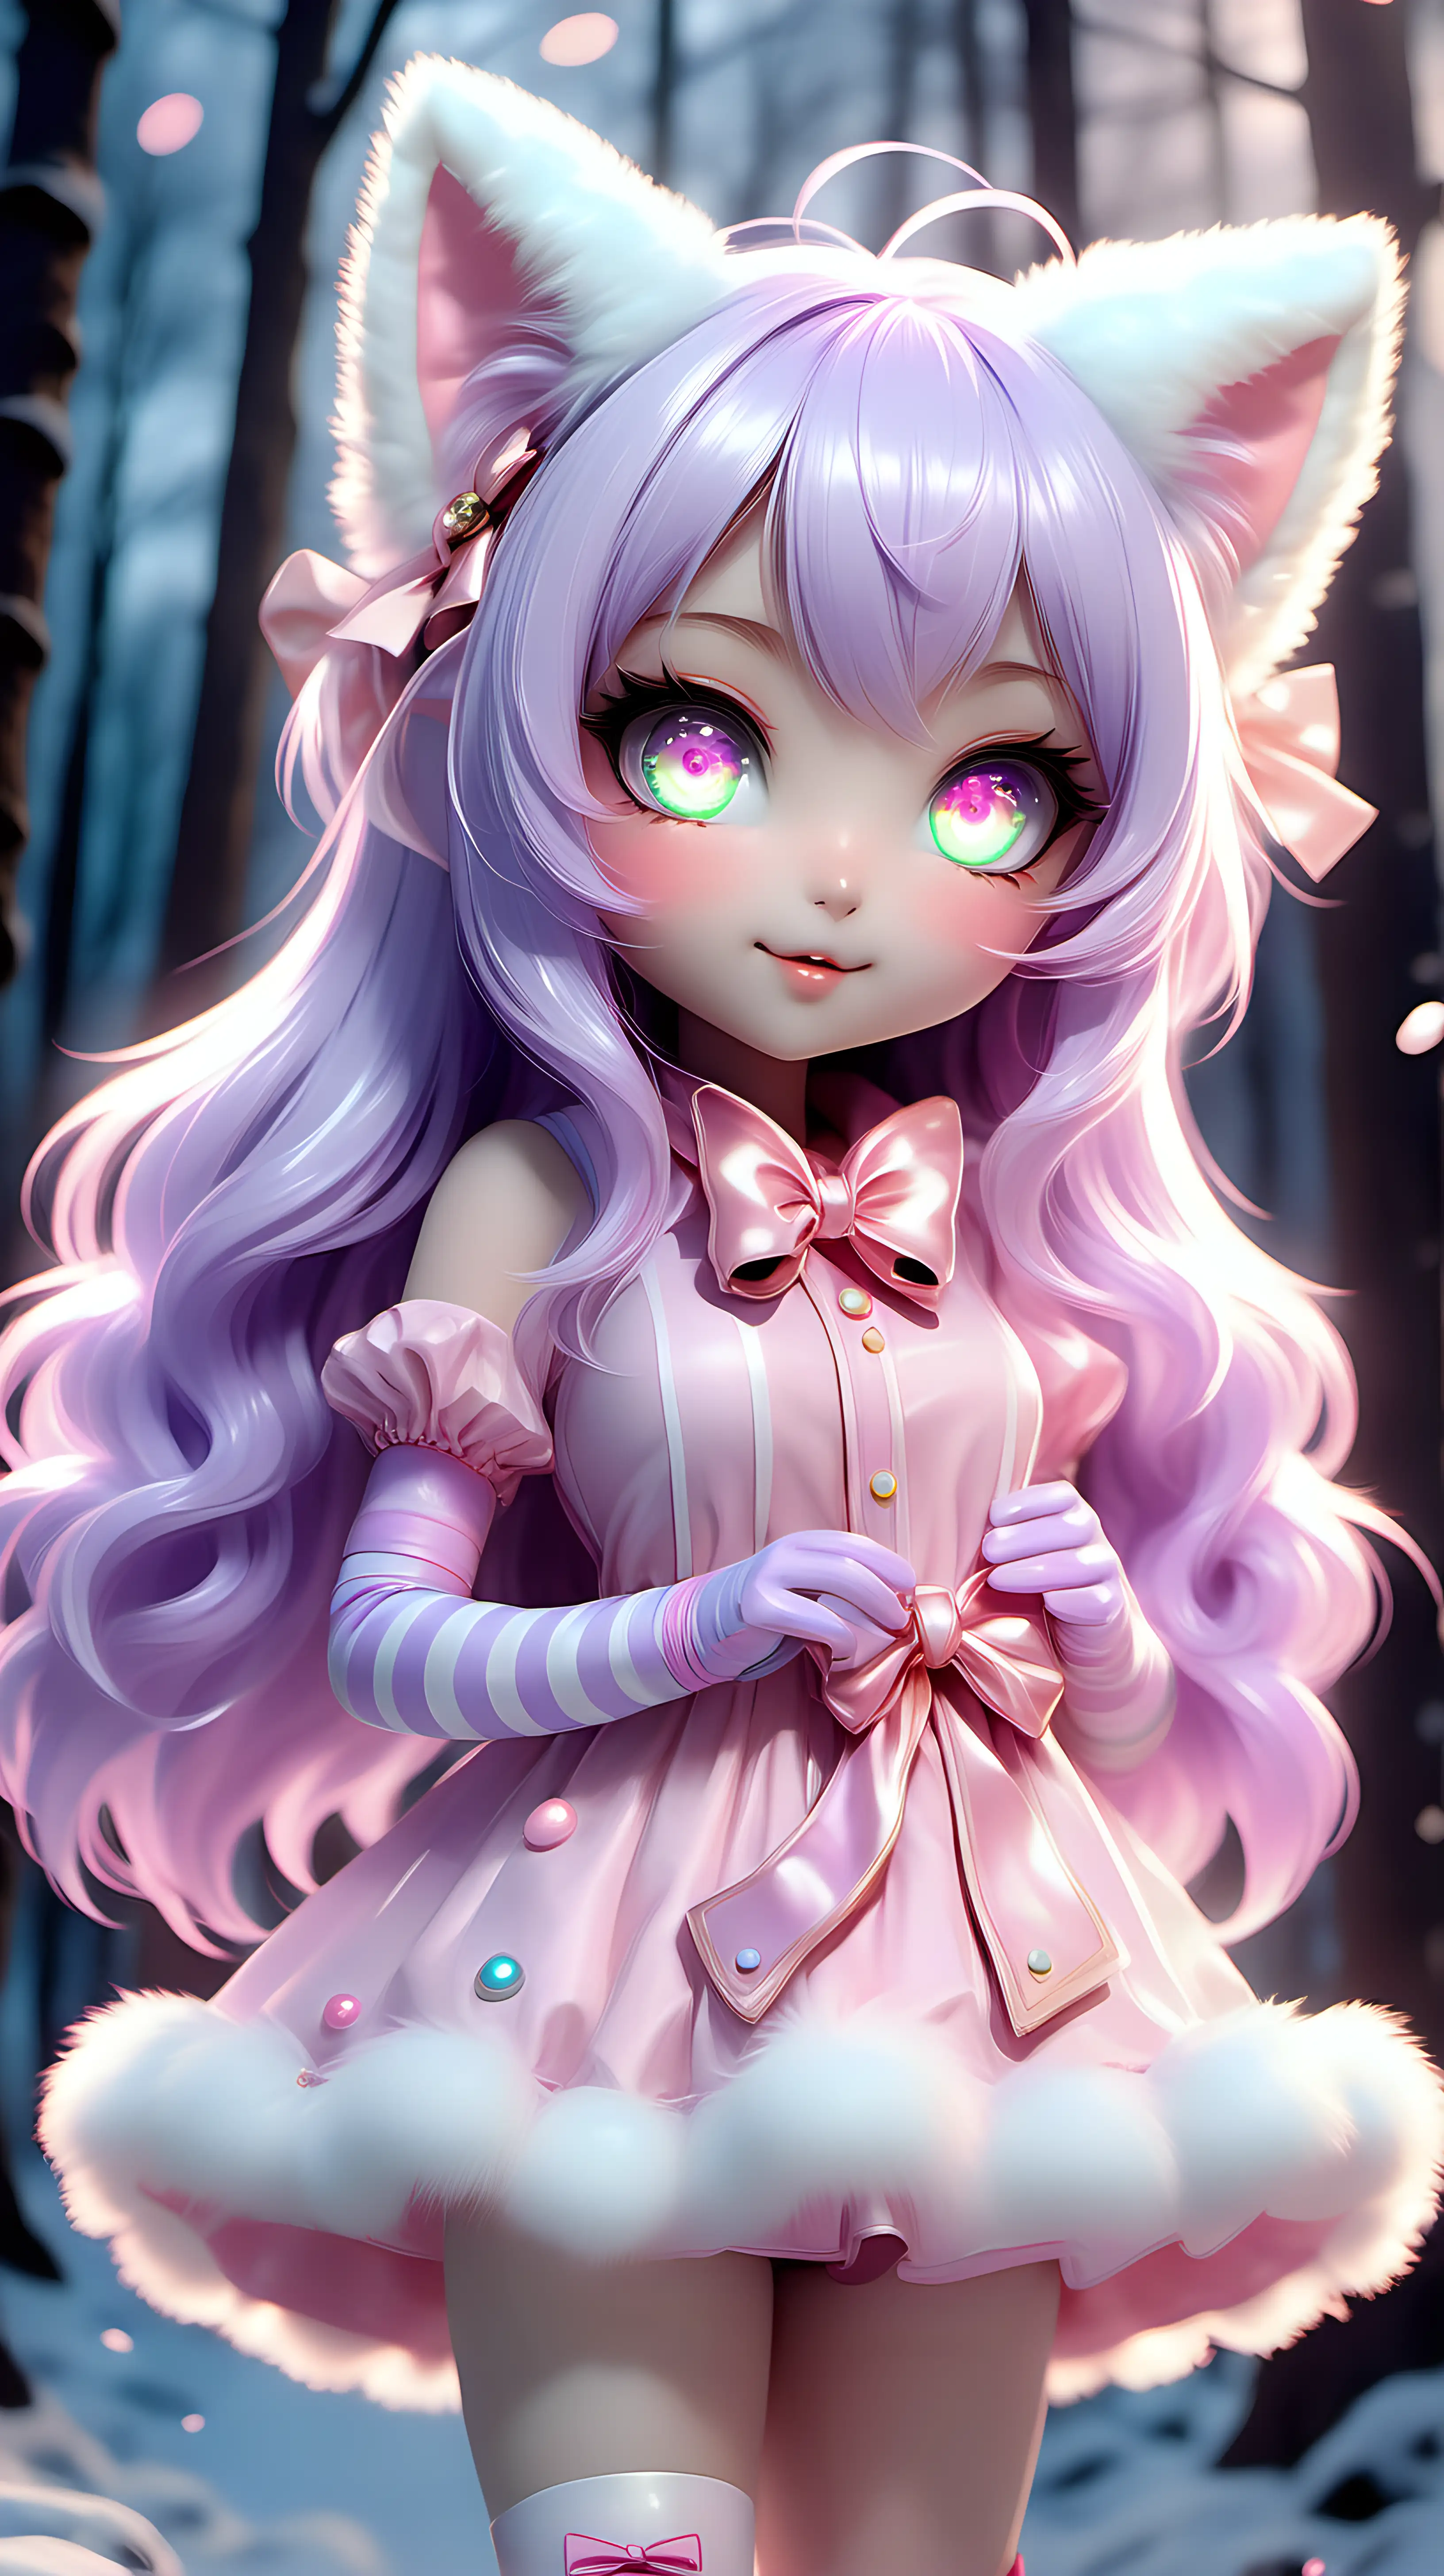 Enchanting Kawaii Neko Anime Girl in Pastel Forest Wonderland